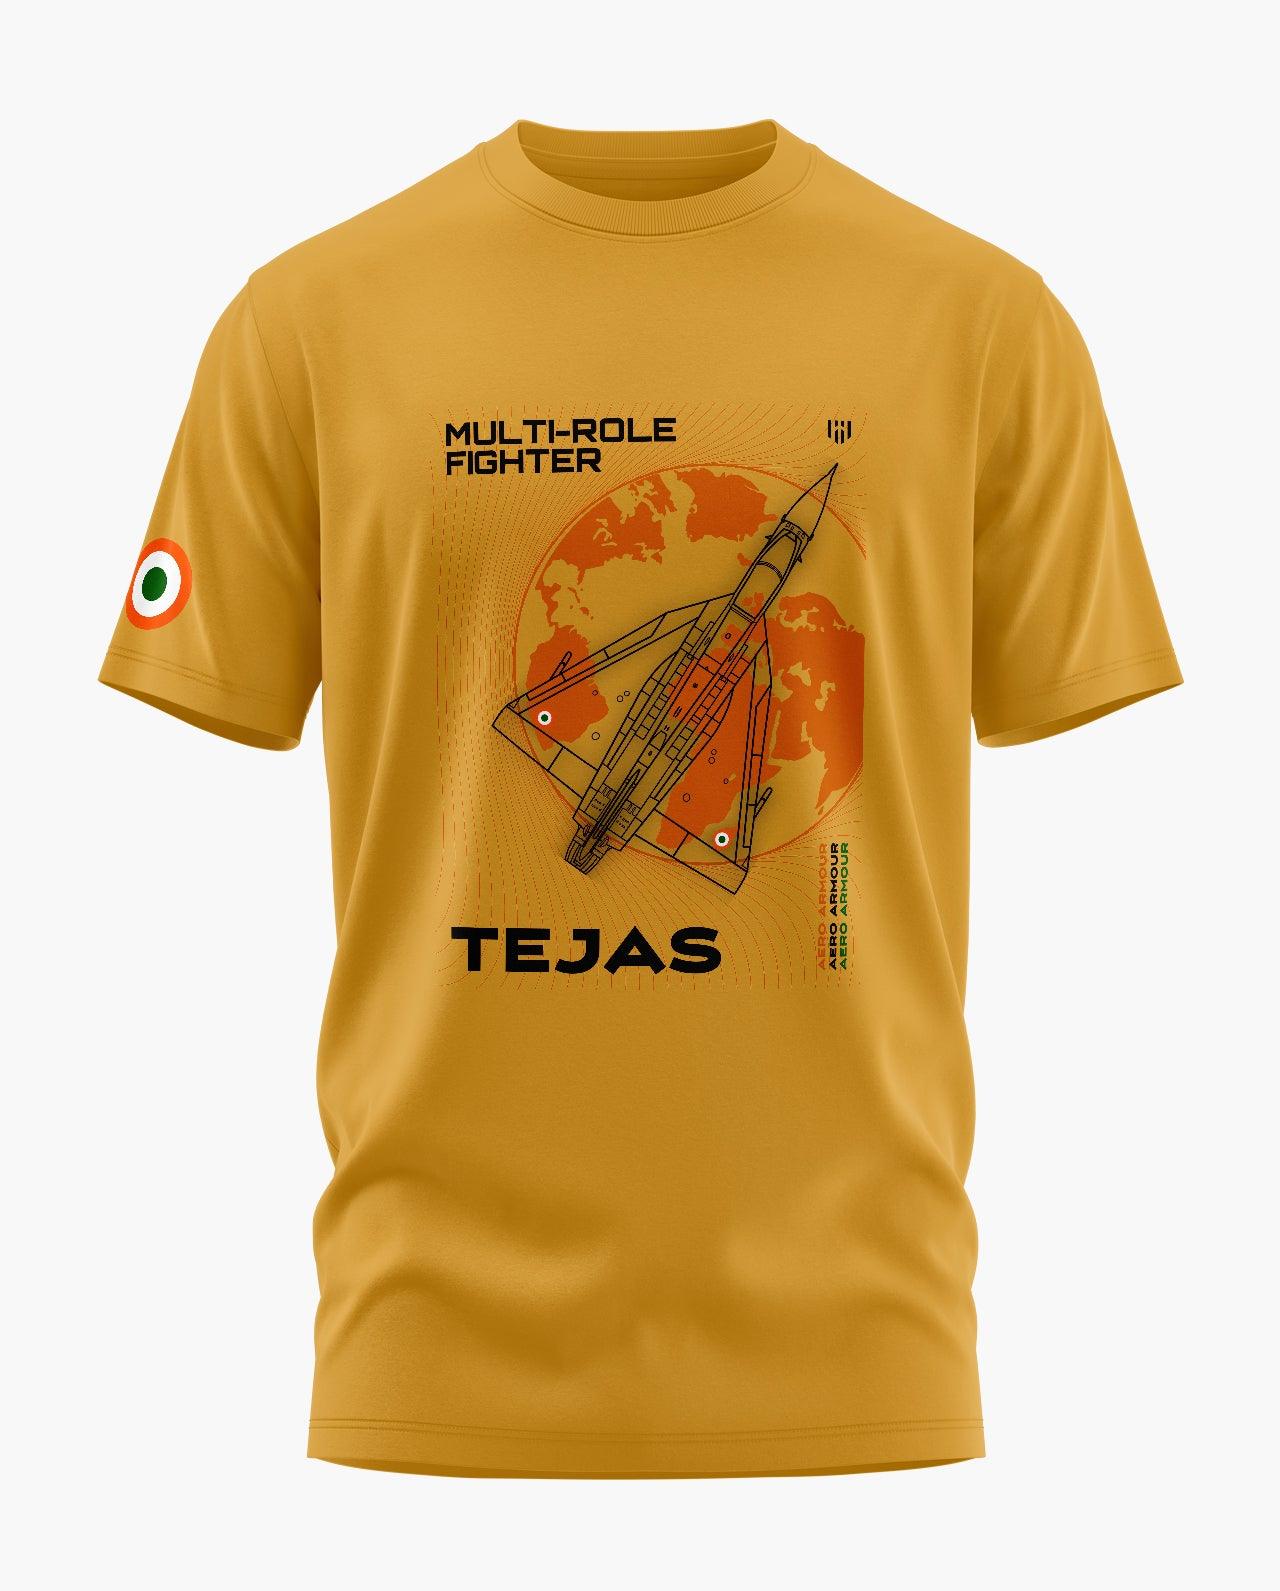 Tejas India T-Shirt - Aero Armour